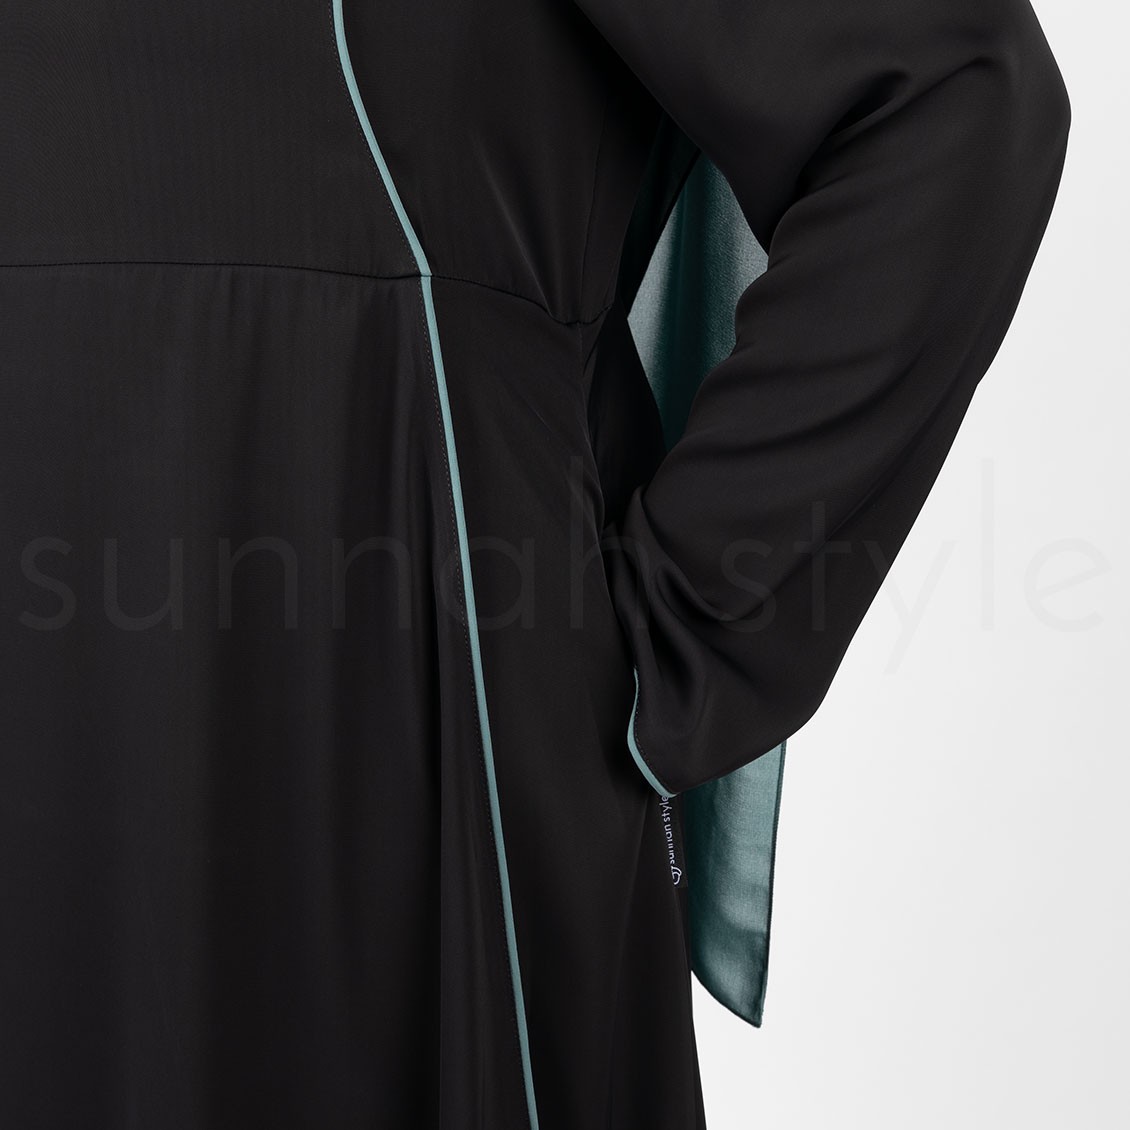 Sunnah Style Anemone Layered Abaya Black Teal